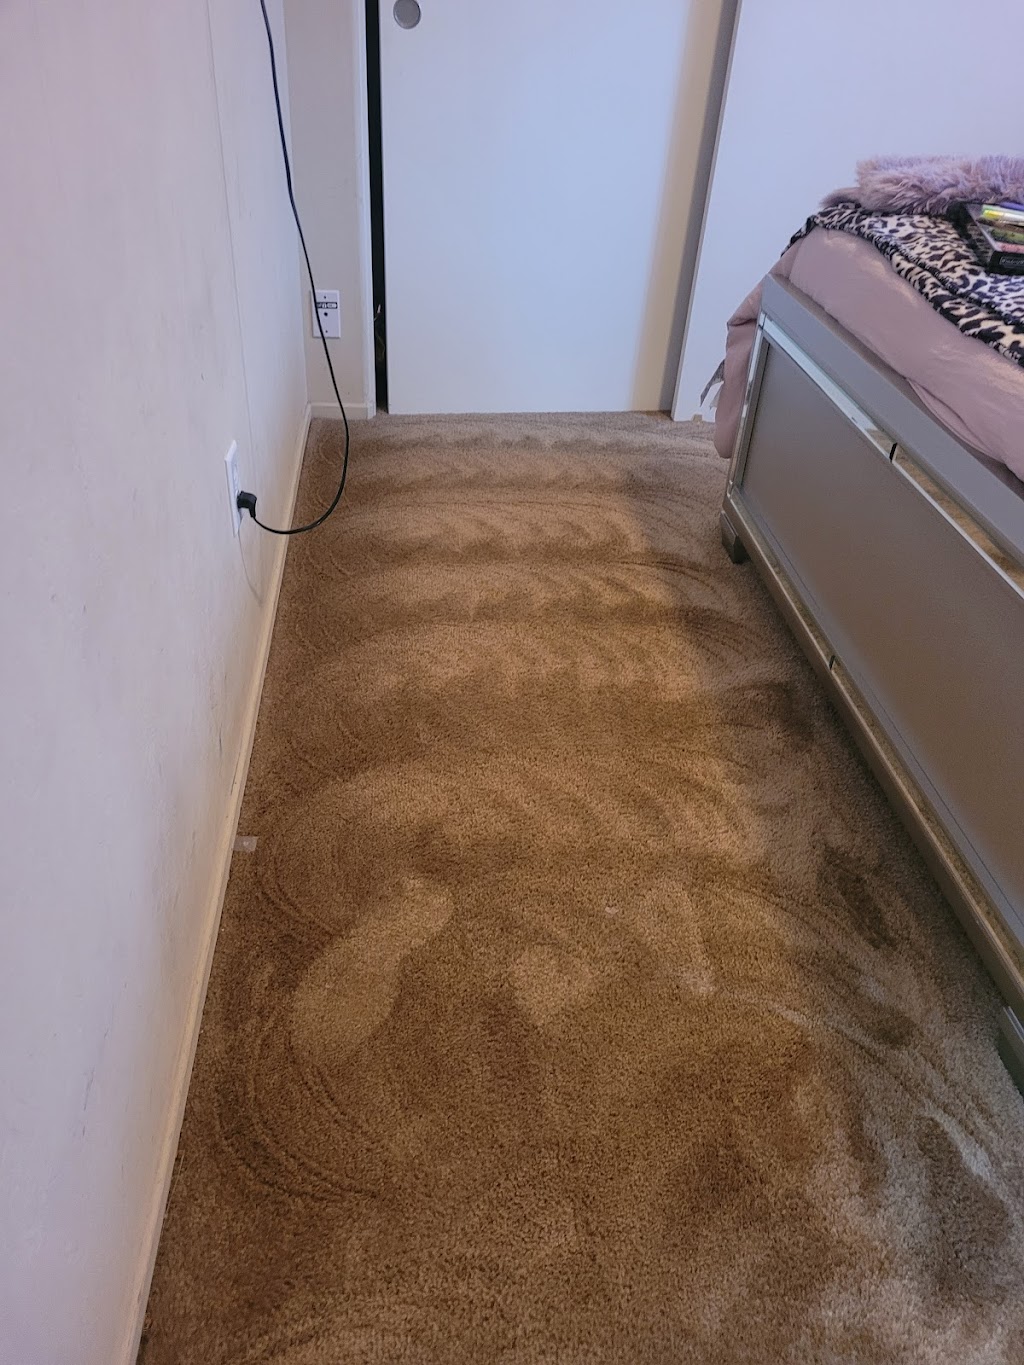 Delano Carpet Cleaning | 2279 Santa Barbara Cir, Delano, CA 93215, USA | Phone: (661) 204-6037